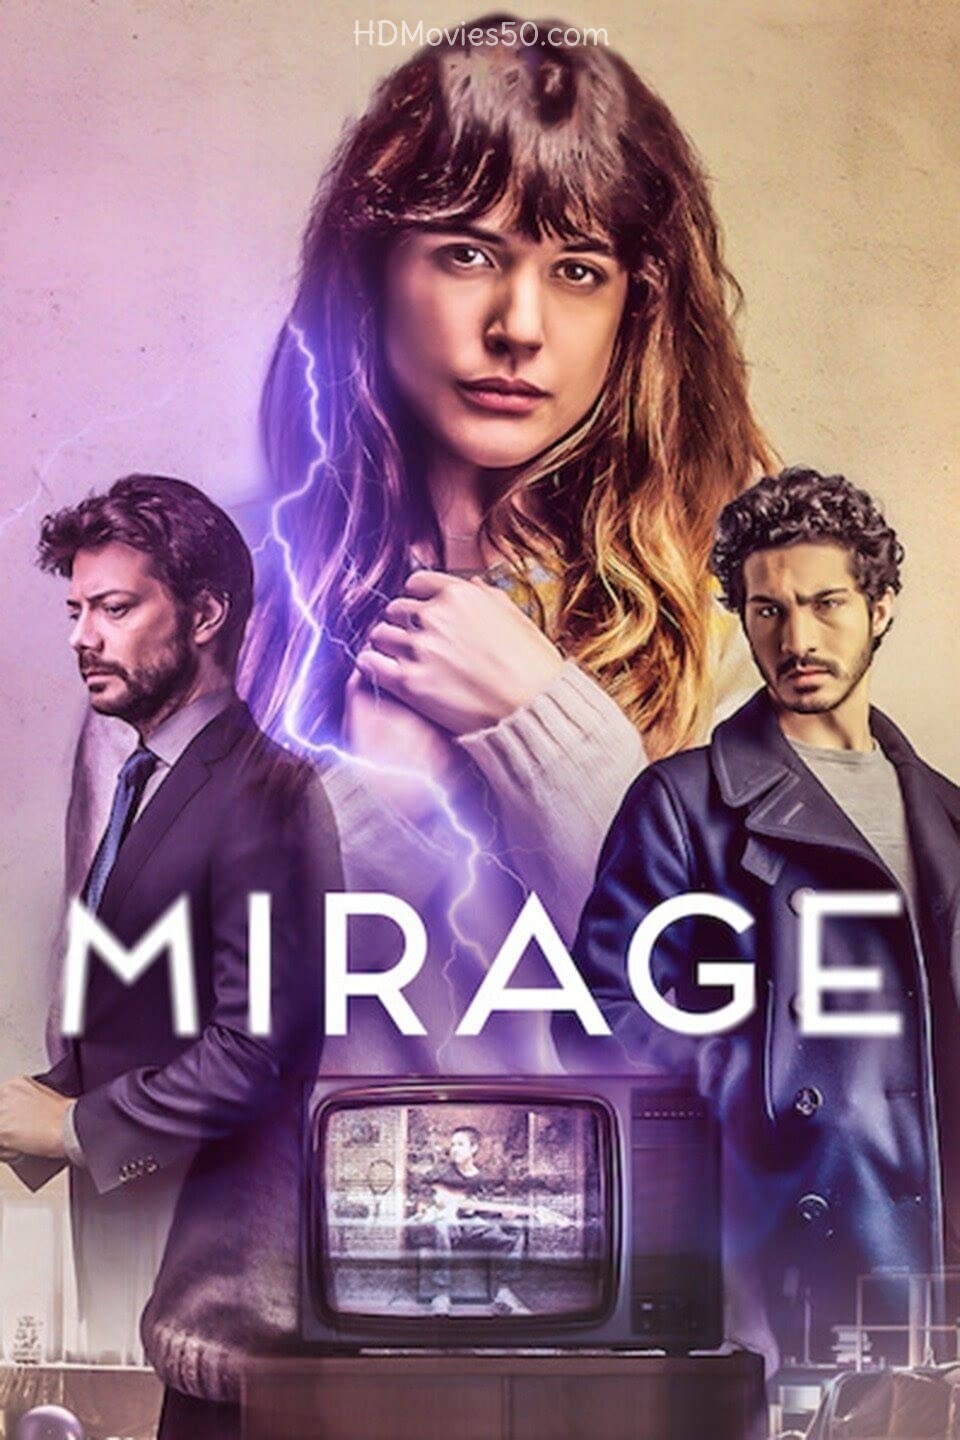 [Download] mirage movie download filmyzilla 4K, HD, 1080p 480p,720p 300MB